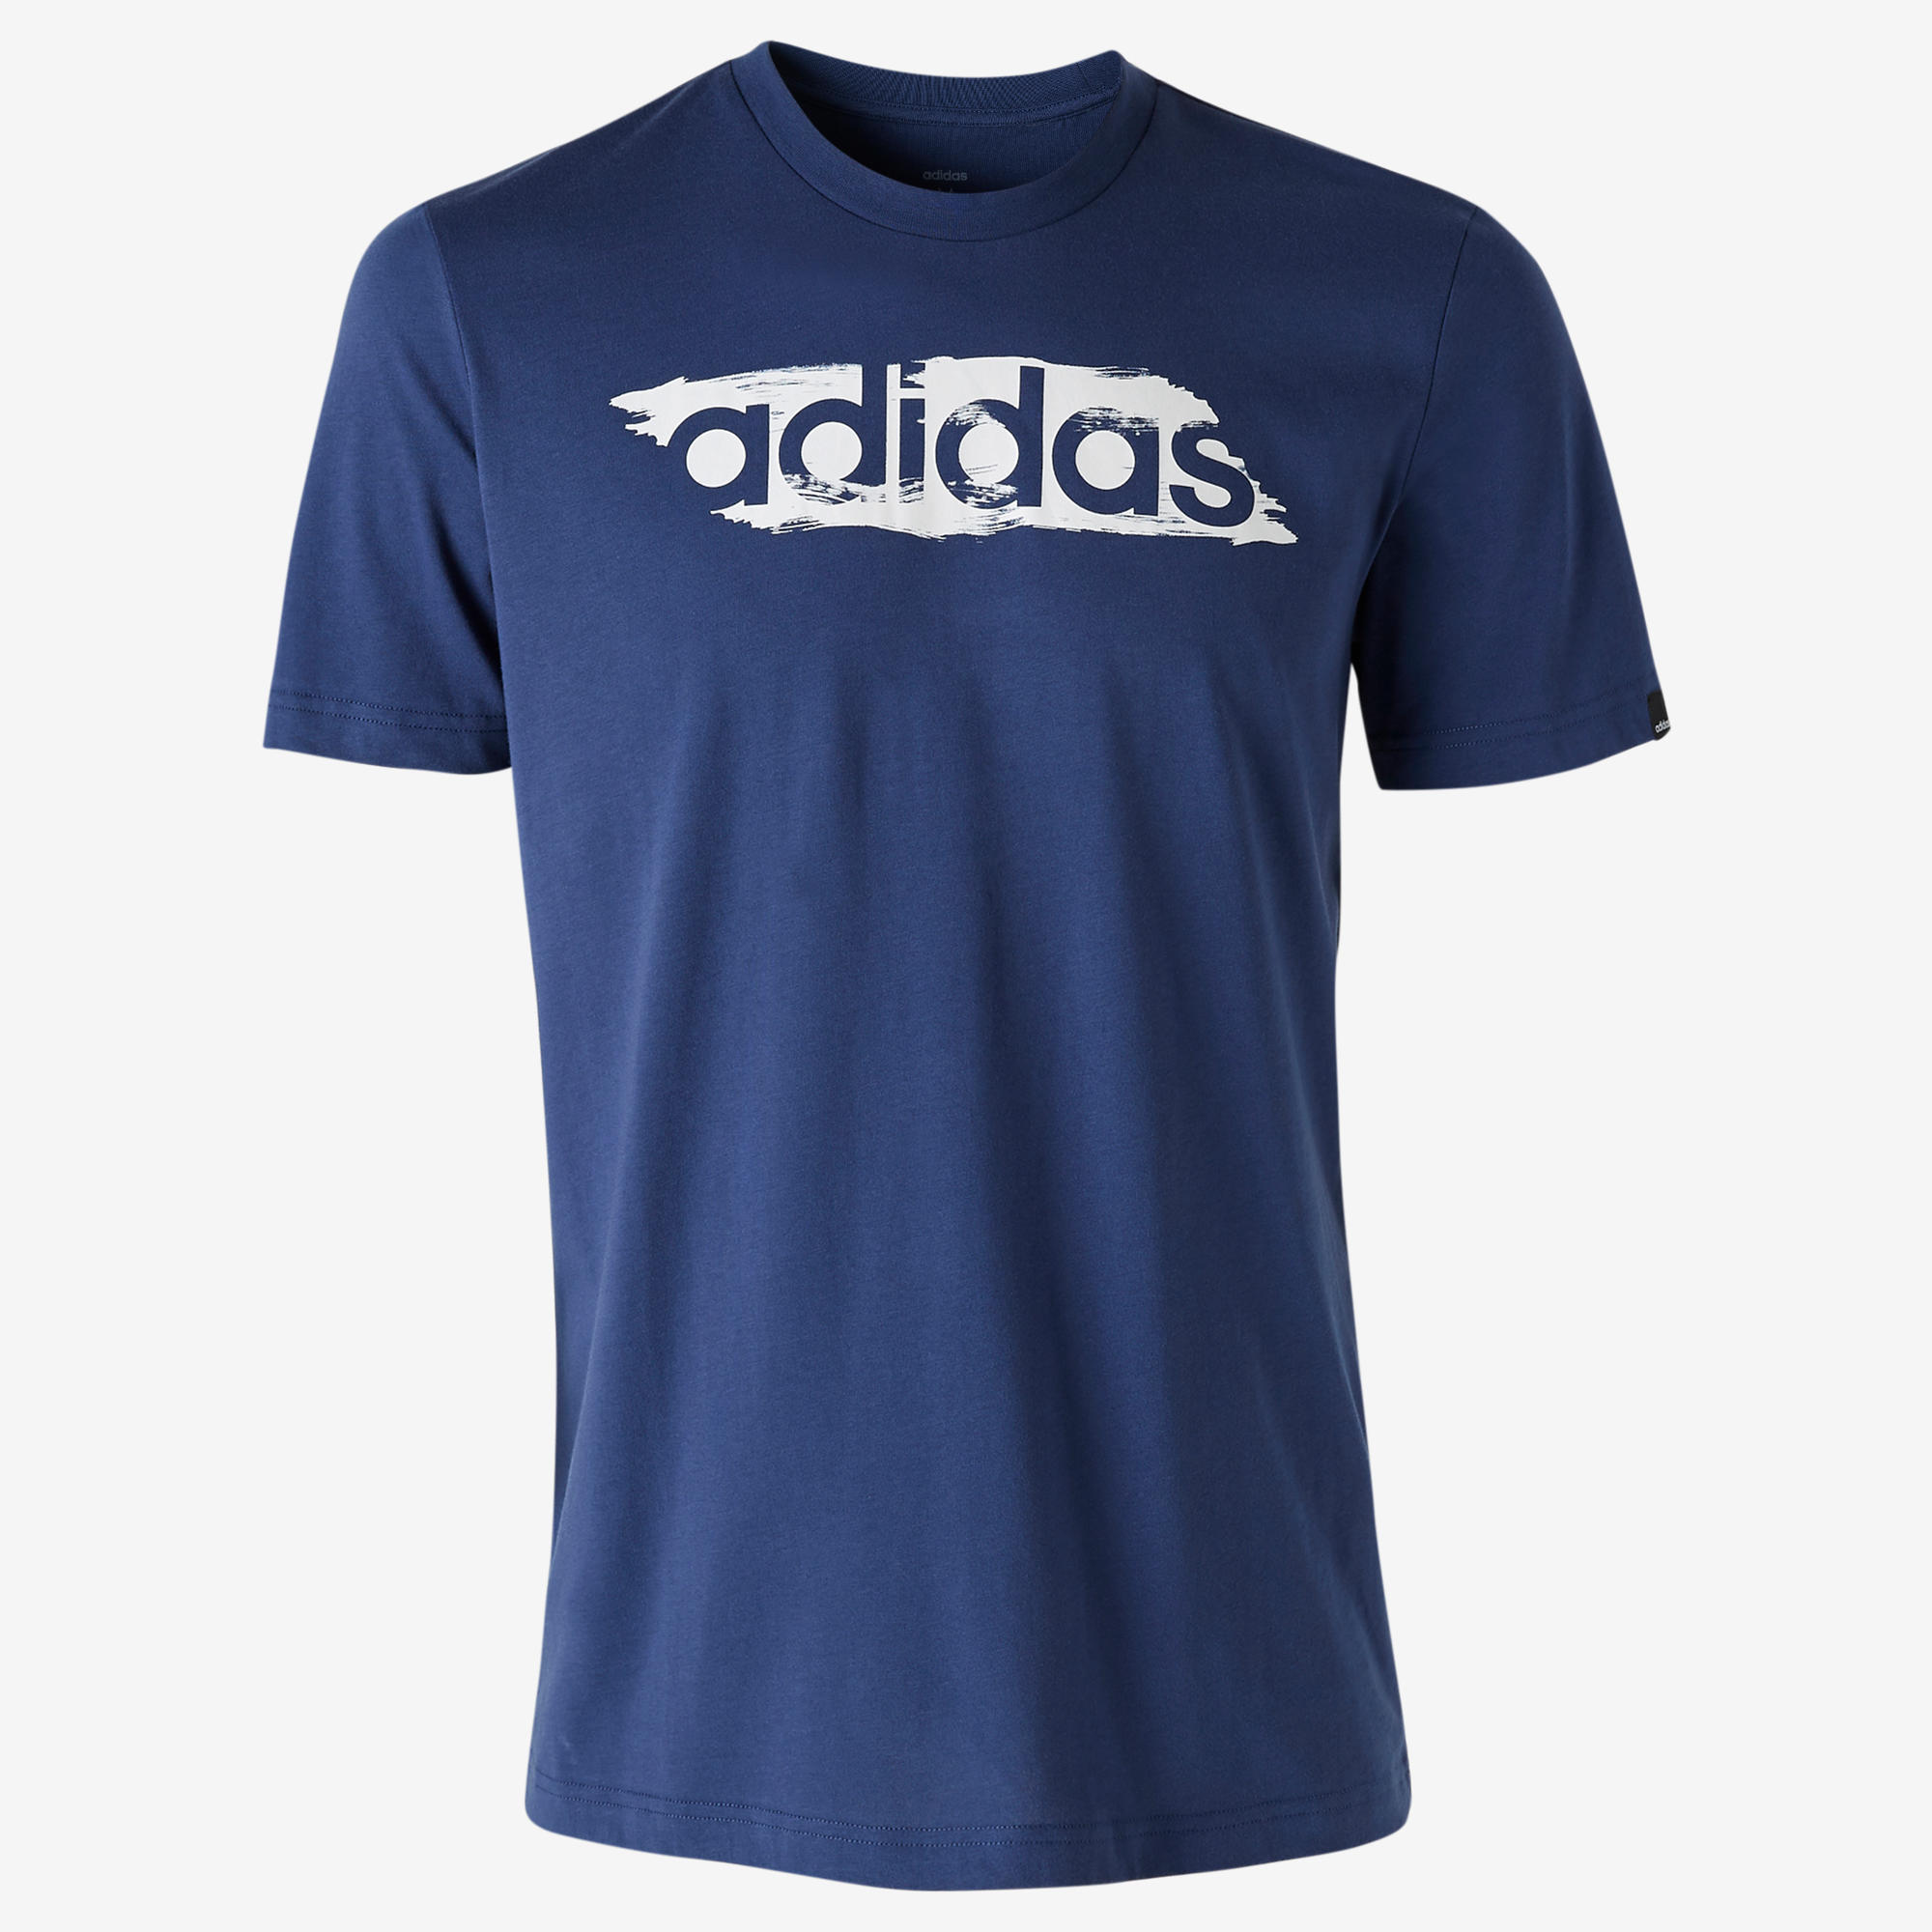 decathlon t shirt adidas